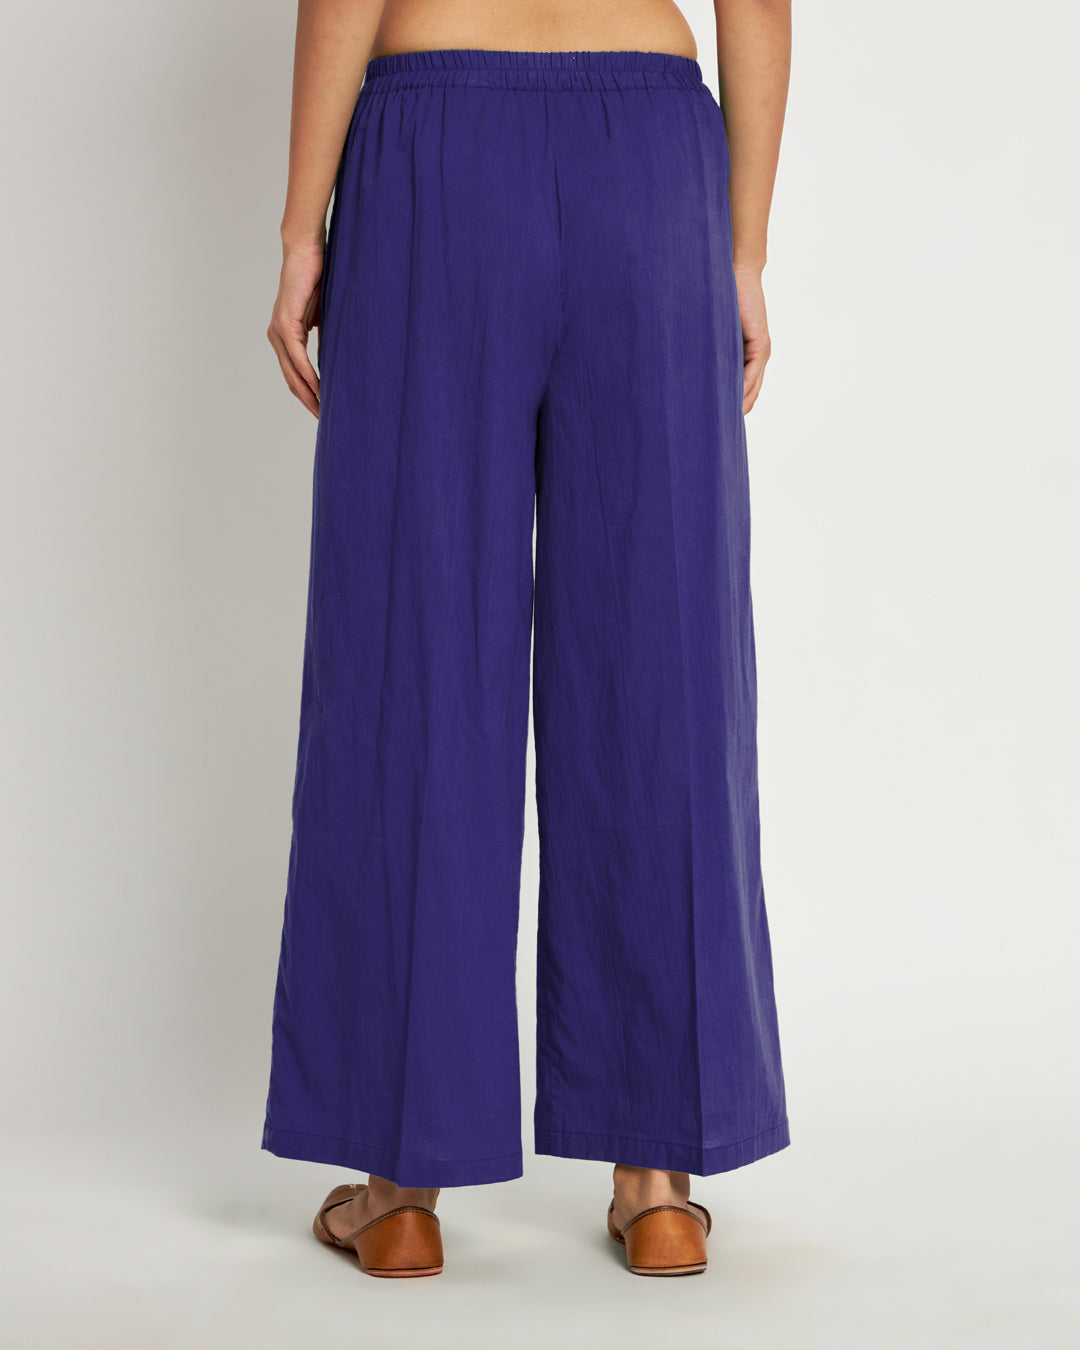 Combo: Beige & Aurora Purple Wide Pants- Set Of 2